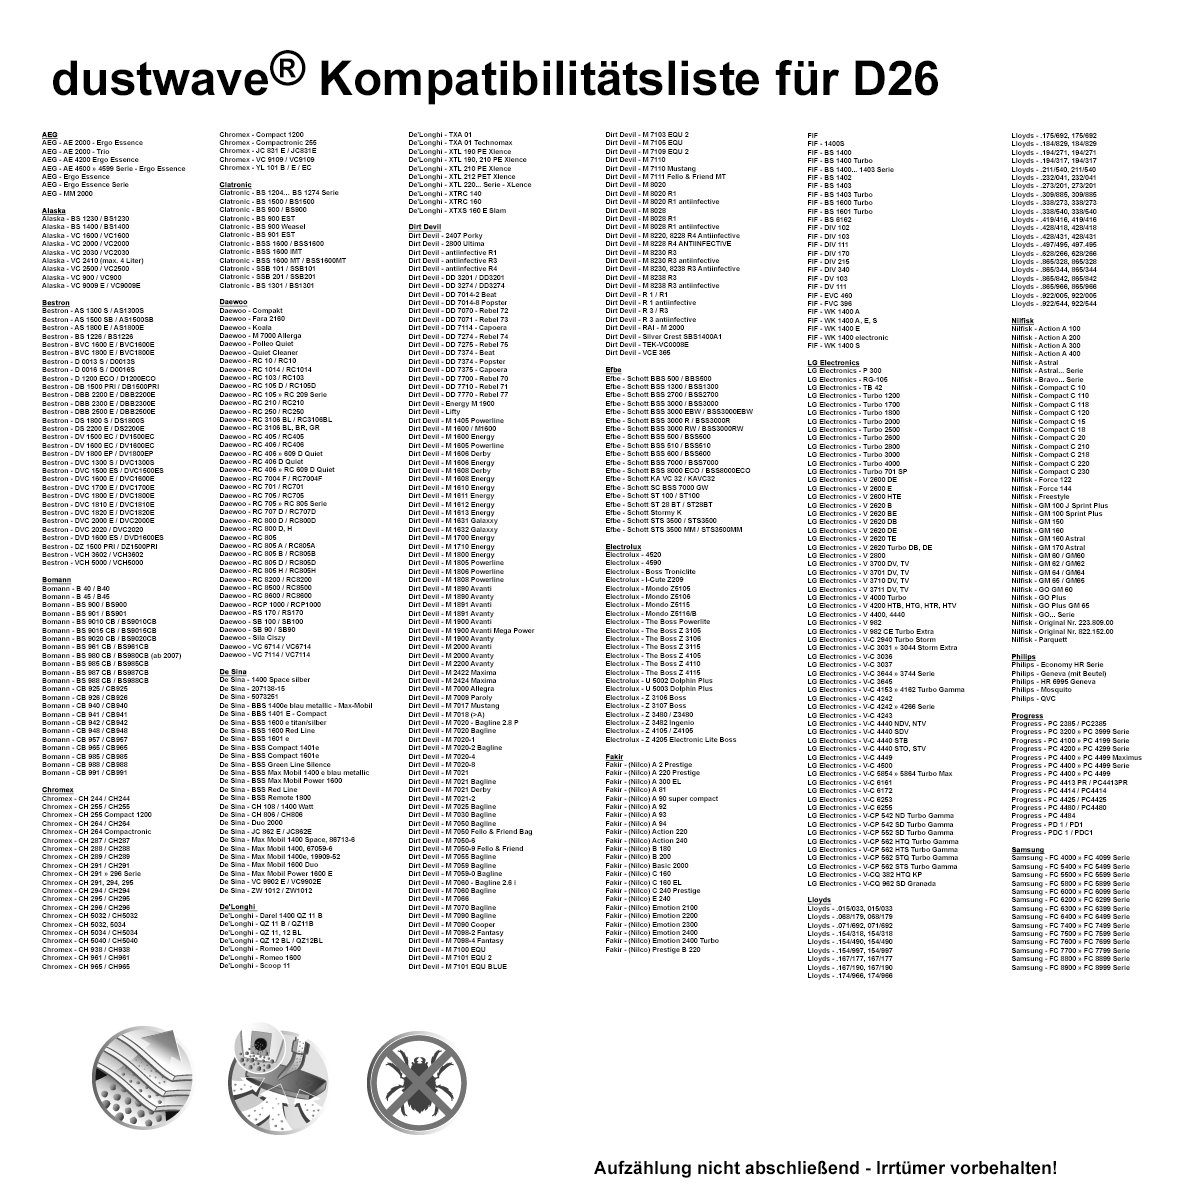 Dustwave Staubsaugerbeutel zuschneidbar) Test-Set, 1 - Blitz Beem Test-Set, 5001S St., + Turboclean, VC-D 1 - Hepa-Filter passend (ca. - 1 15x15cm Staubsaugerbeutel für